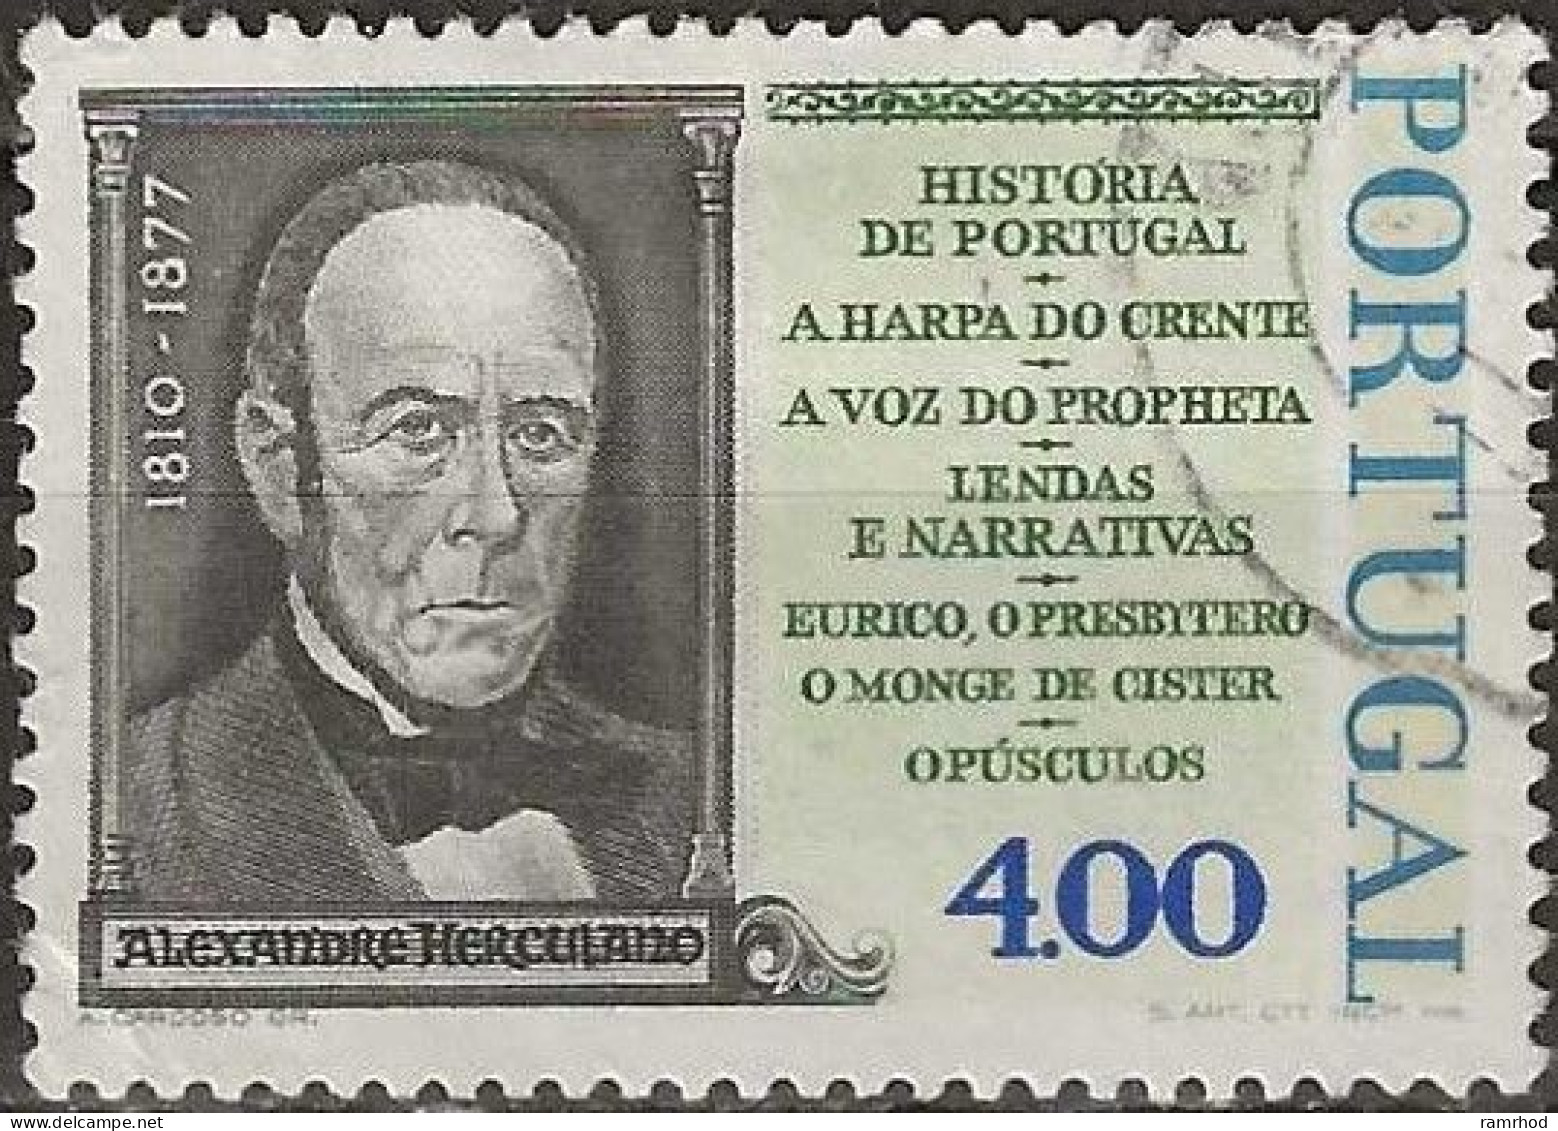 PORTUGAL 1977 Death Centenary Of Alexandre Herculano (writer And Politician) - 4e Alexandre Herculano FU - Oblitérés